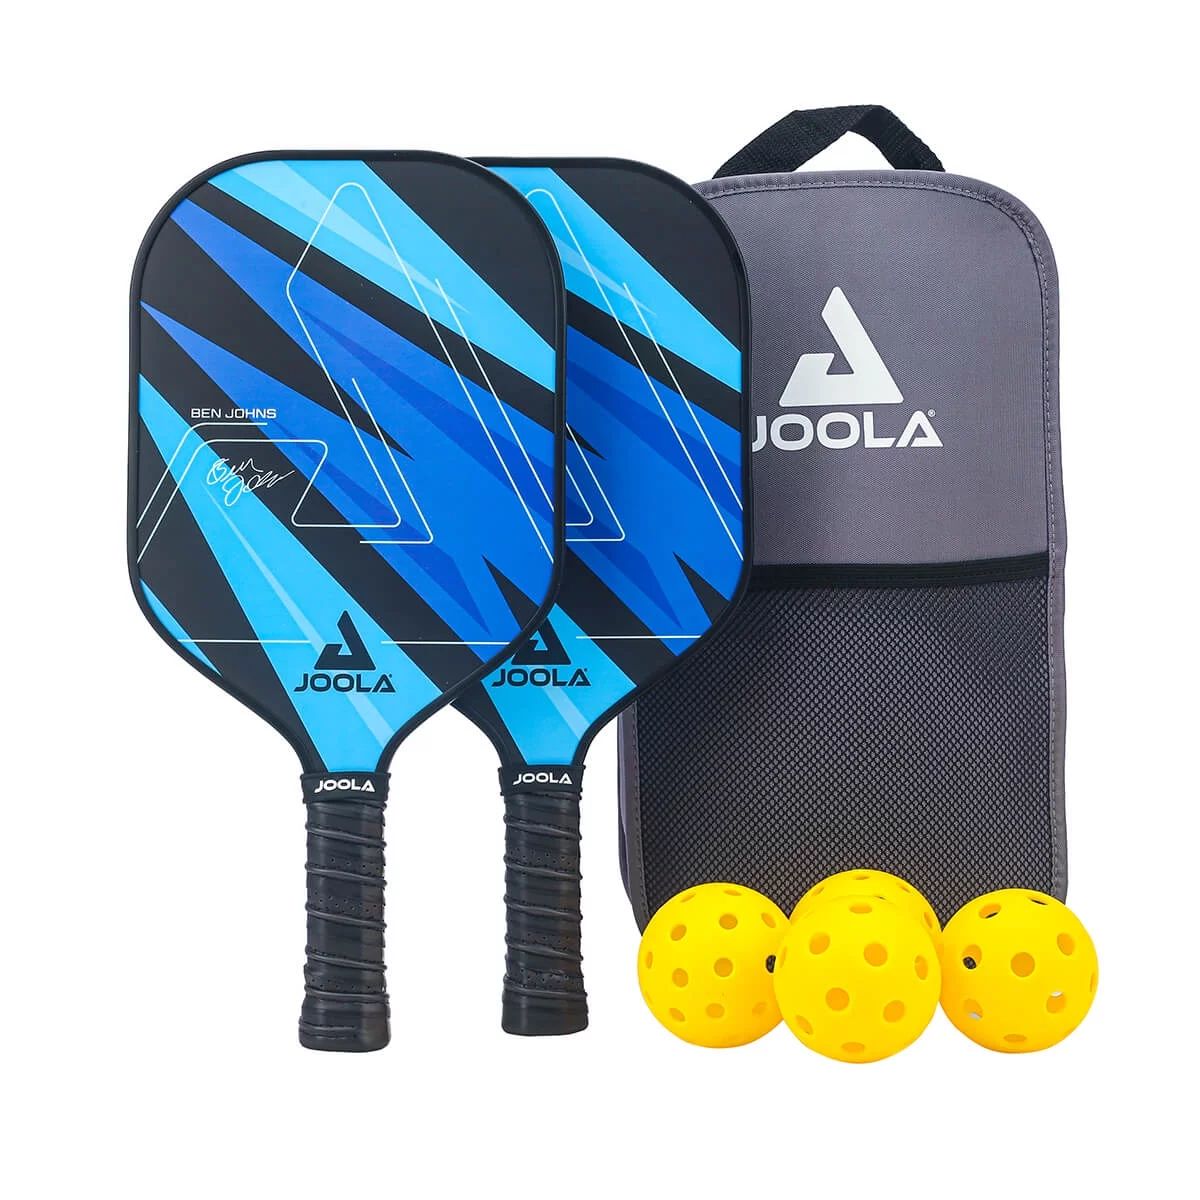 JOOLA Ben Johns Blue Lightning Pickleball Set, 2 Paddles, Paddle Bag, 4 Balls, Blue | Walmart (US)